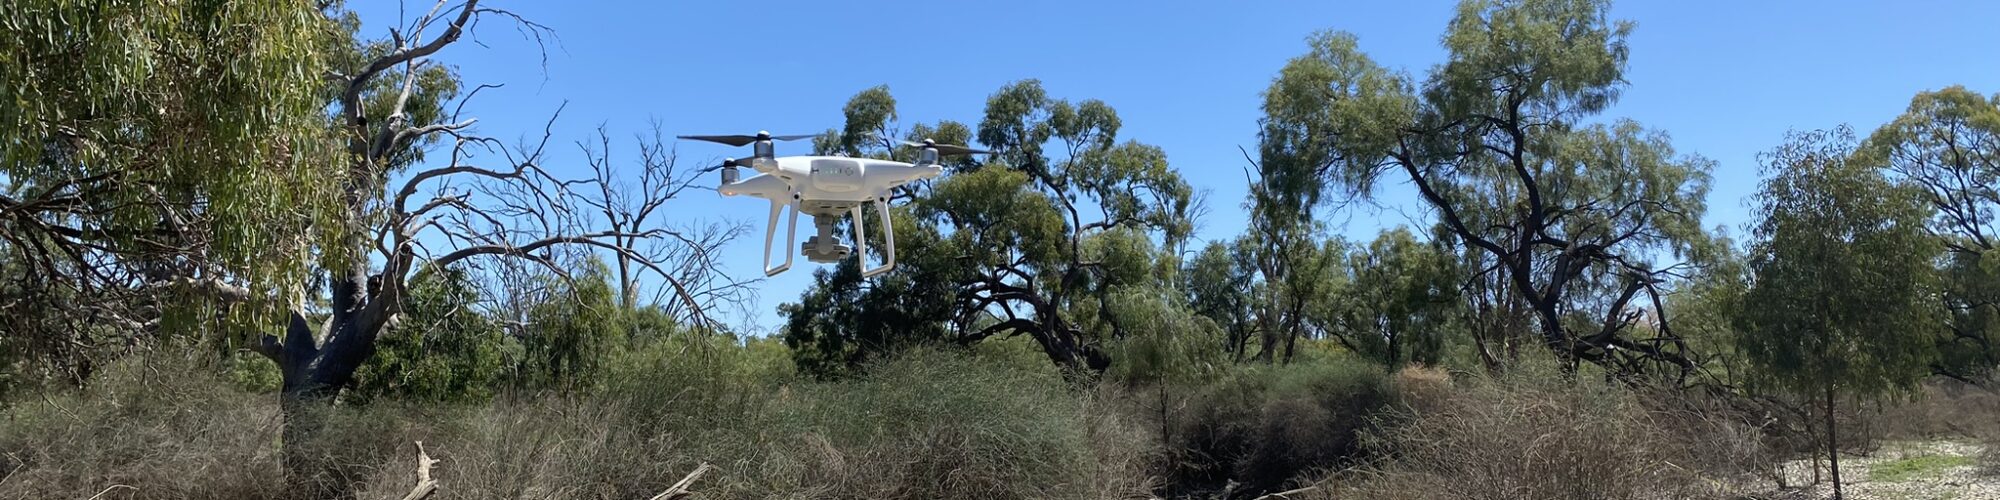 Drone surveys at Hattah Lakes, Mildura. Photo credit: University of Canberra